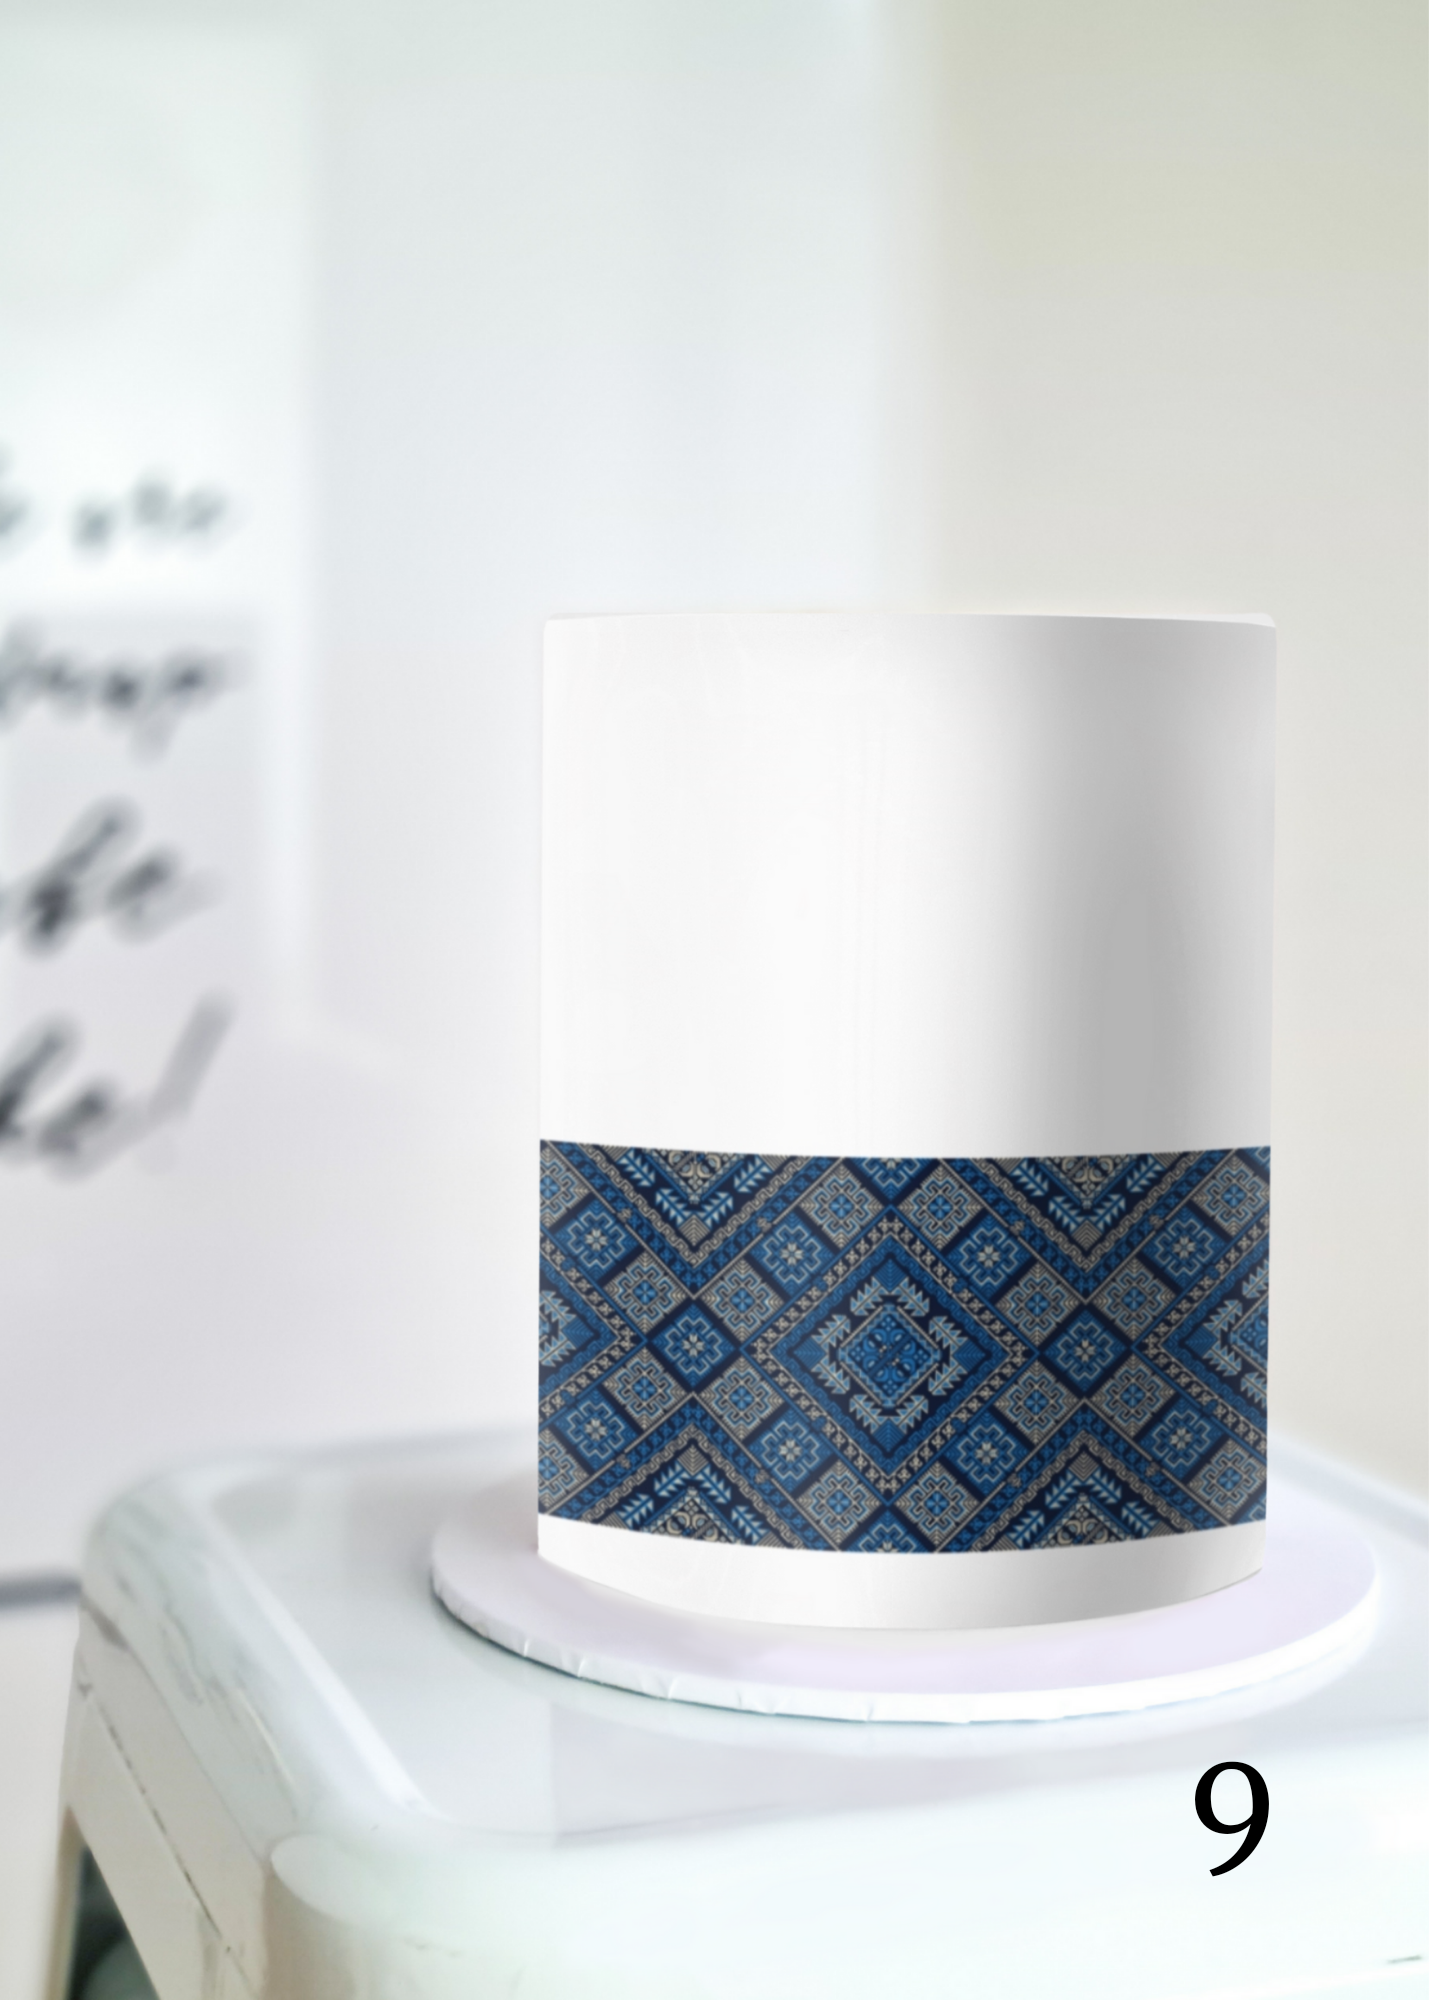 Tatreez embroidery cake wrap edible image